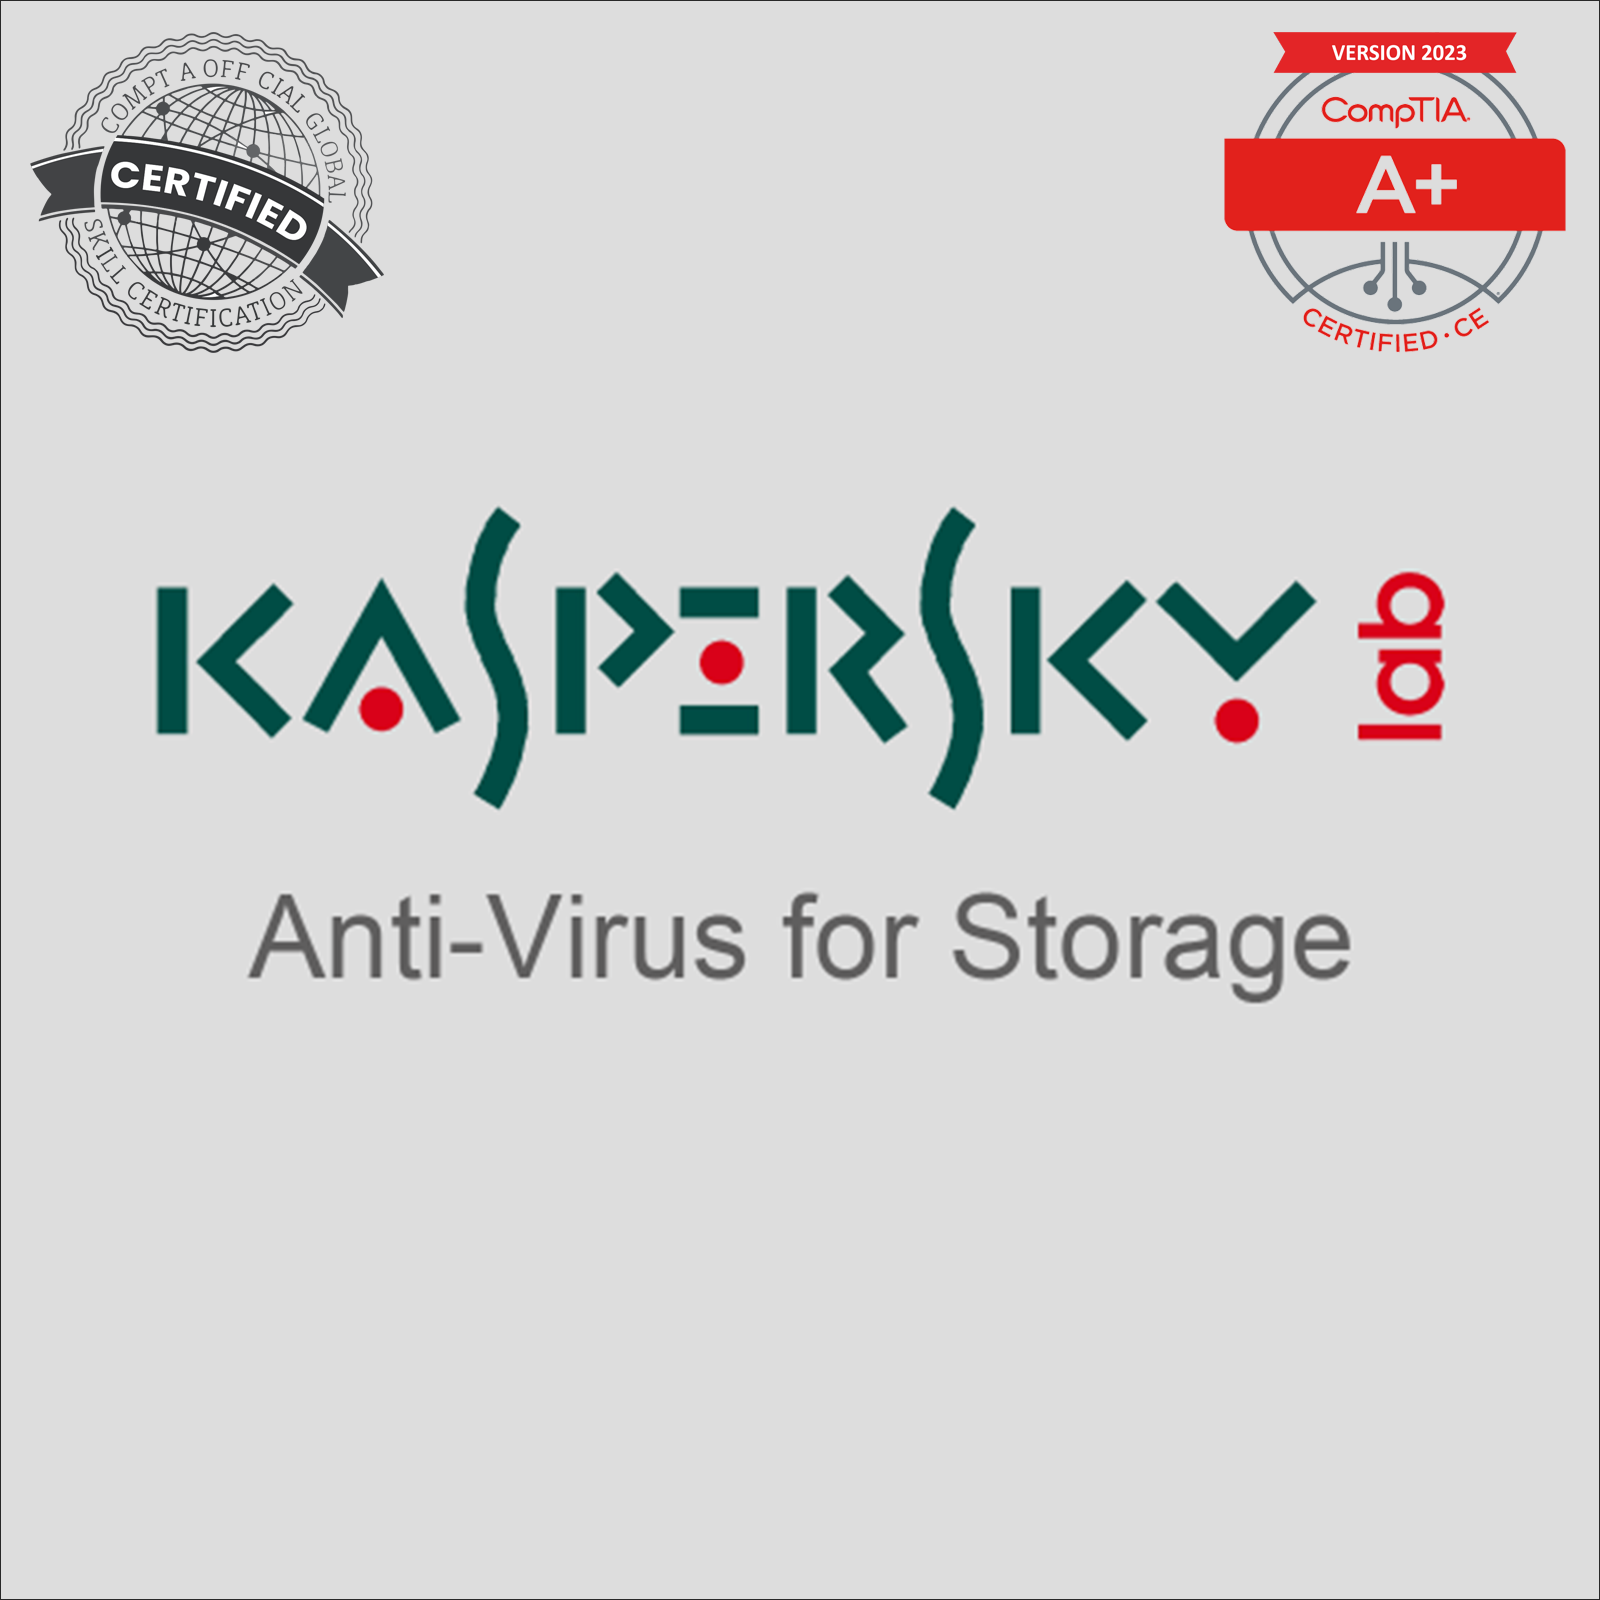 Kaspersky Anti-Virus for Storage - EDU - Renewal - 3-Year / 25-49 Seats (Band P)